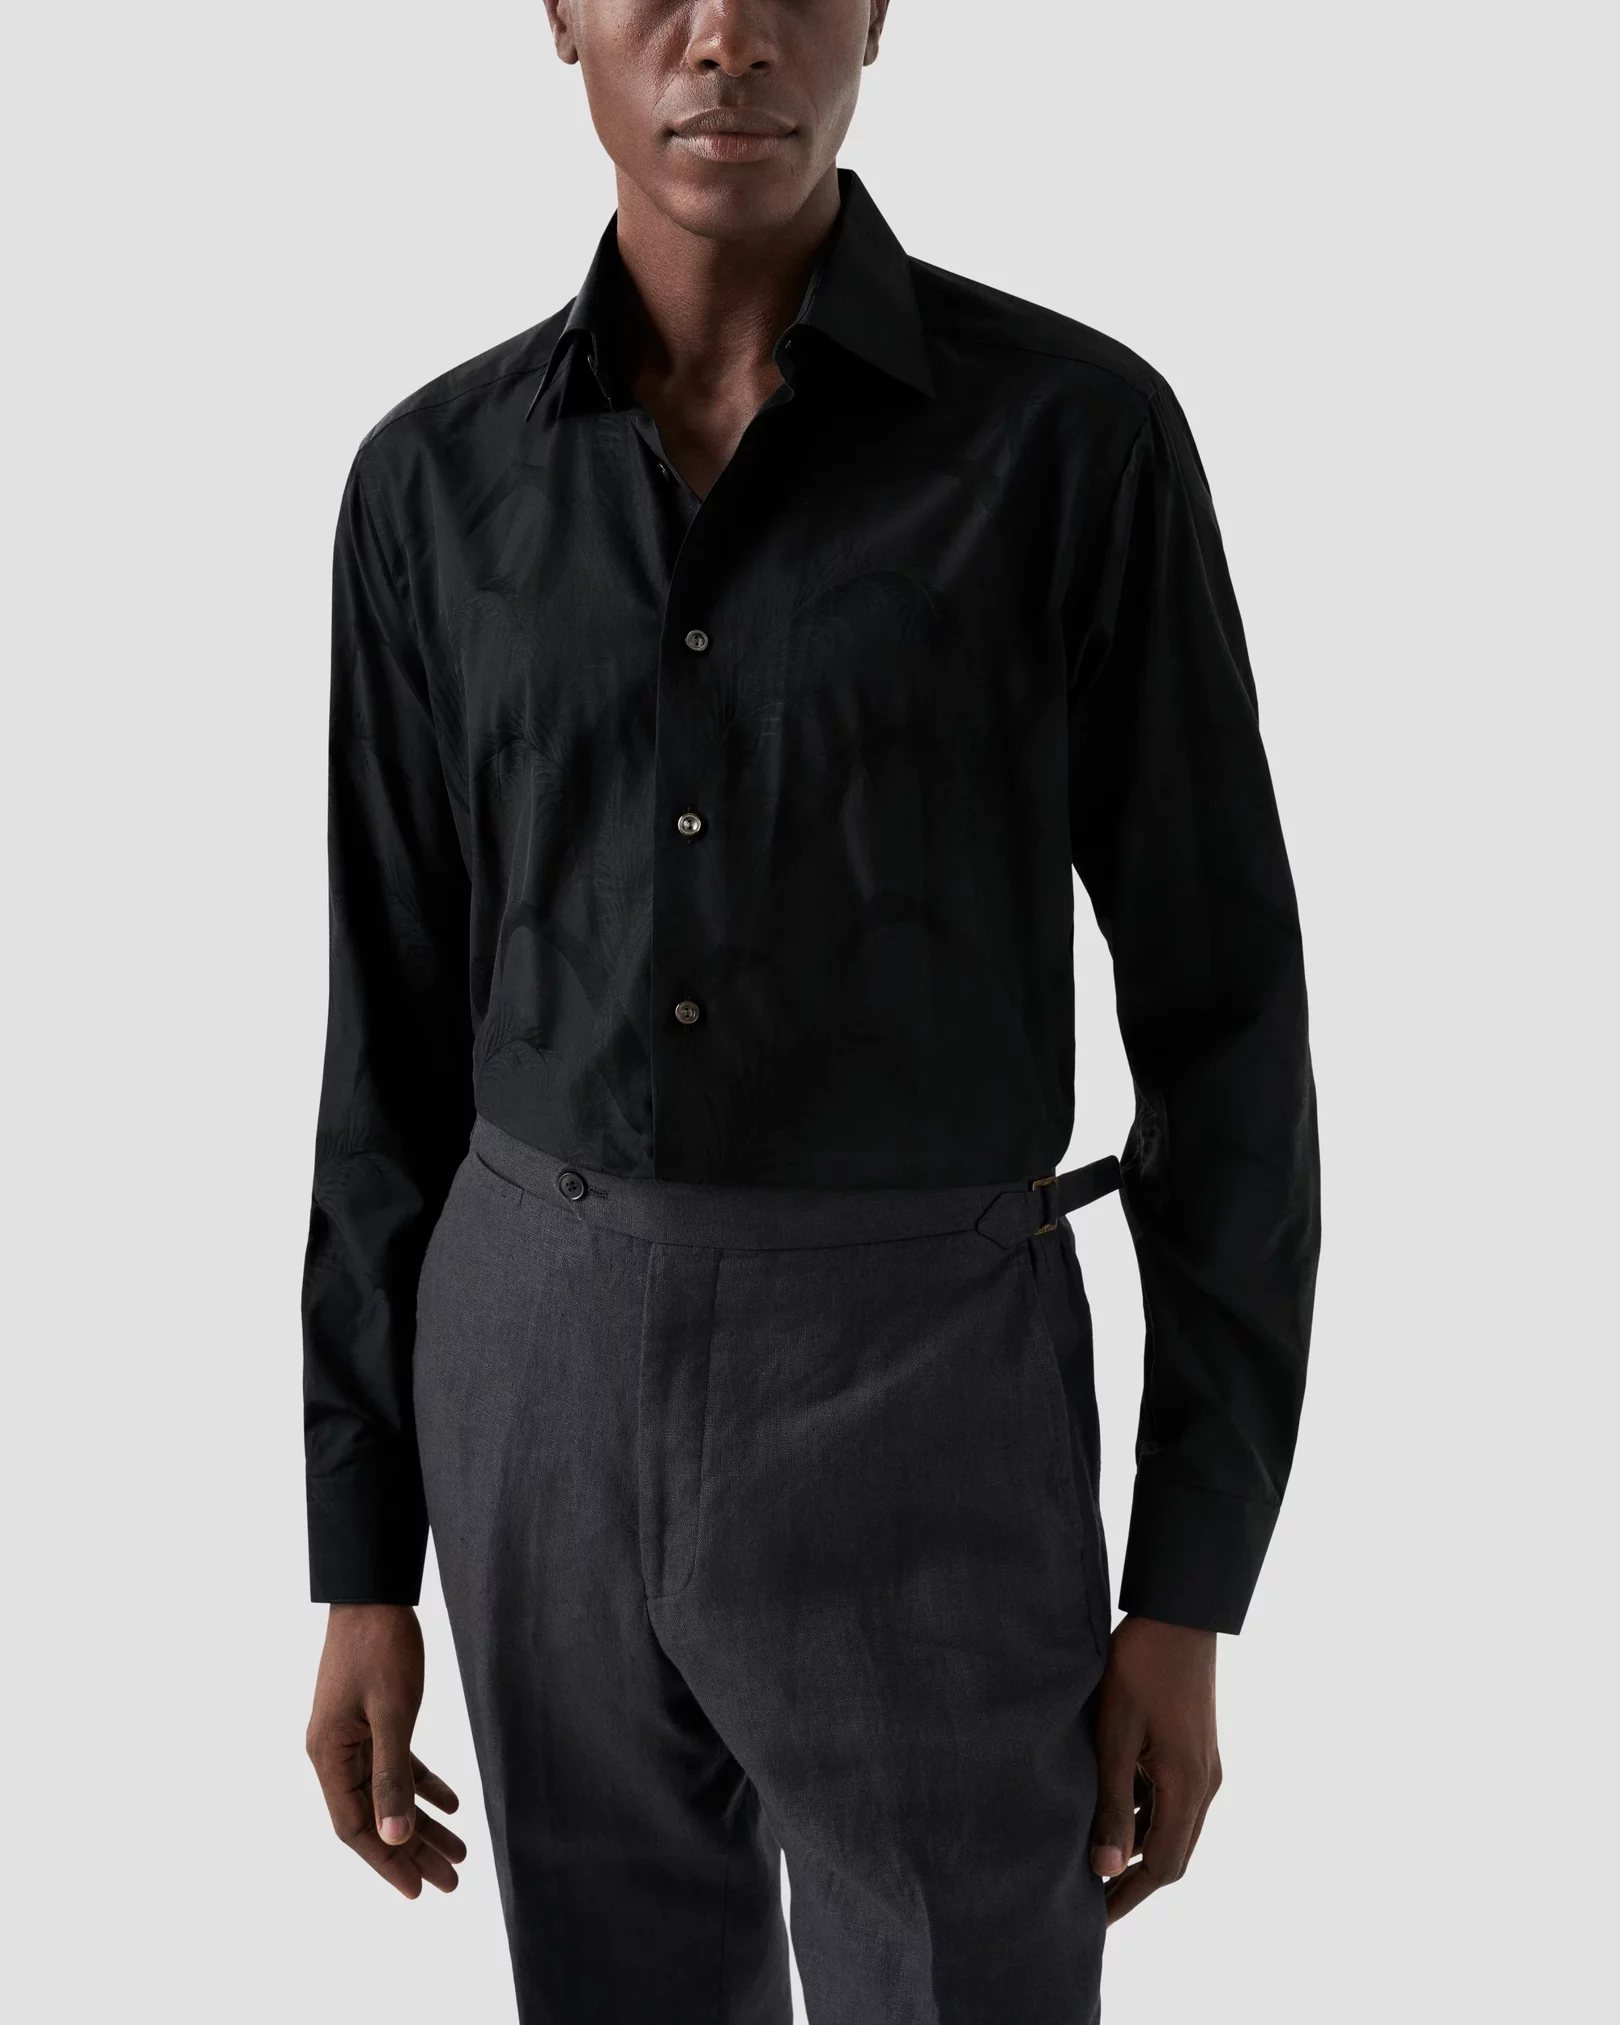 Eton - Black Floral Print Jacquard Shirt